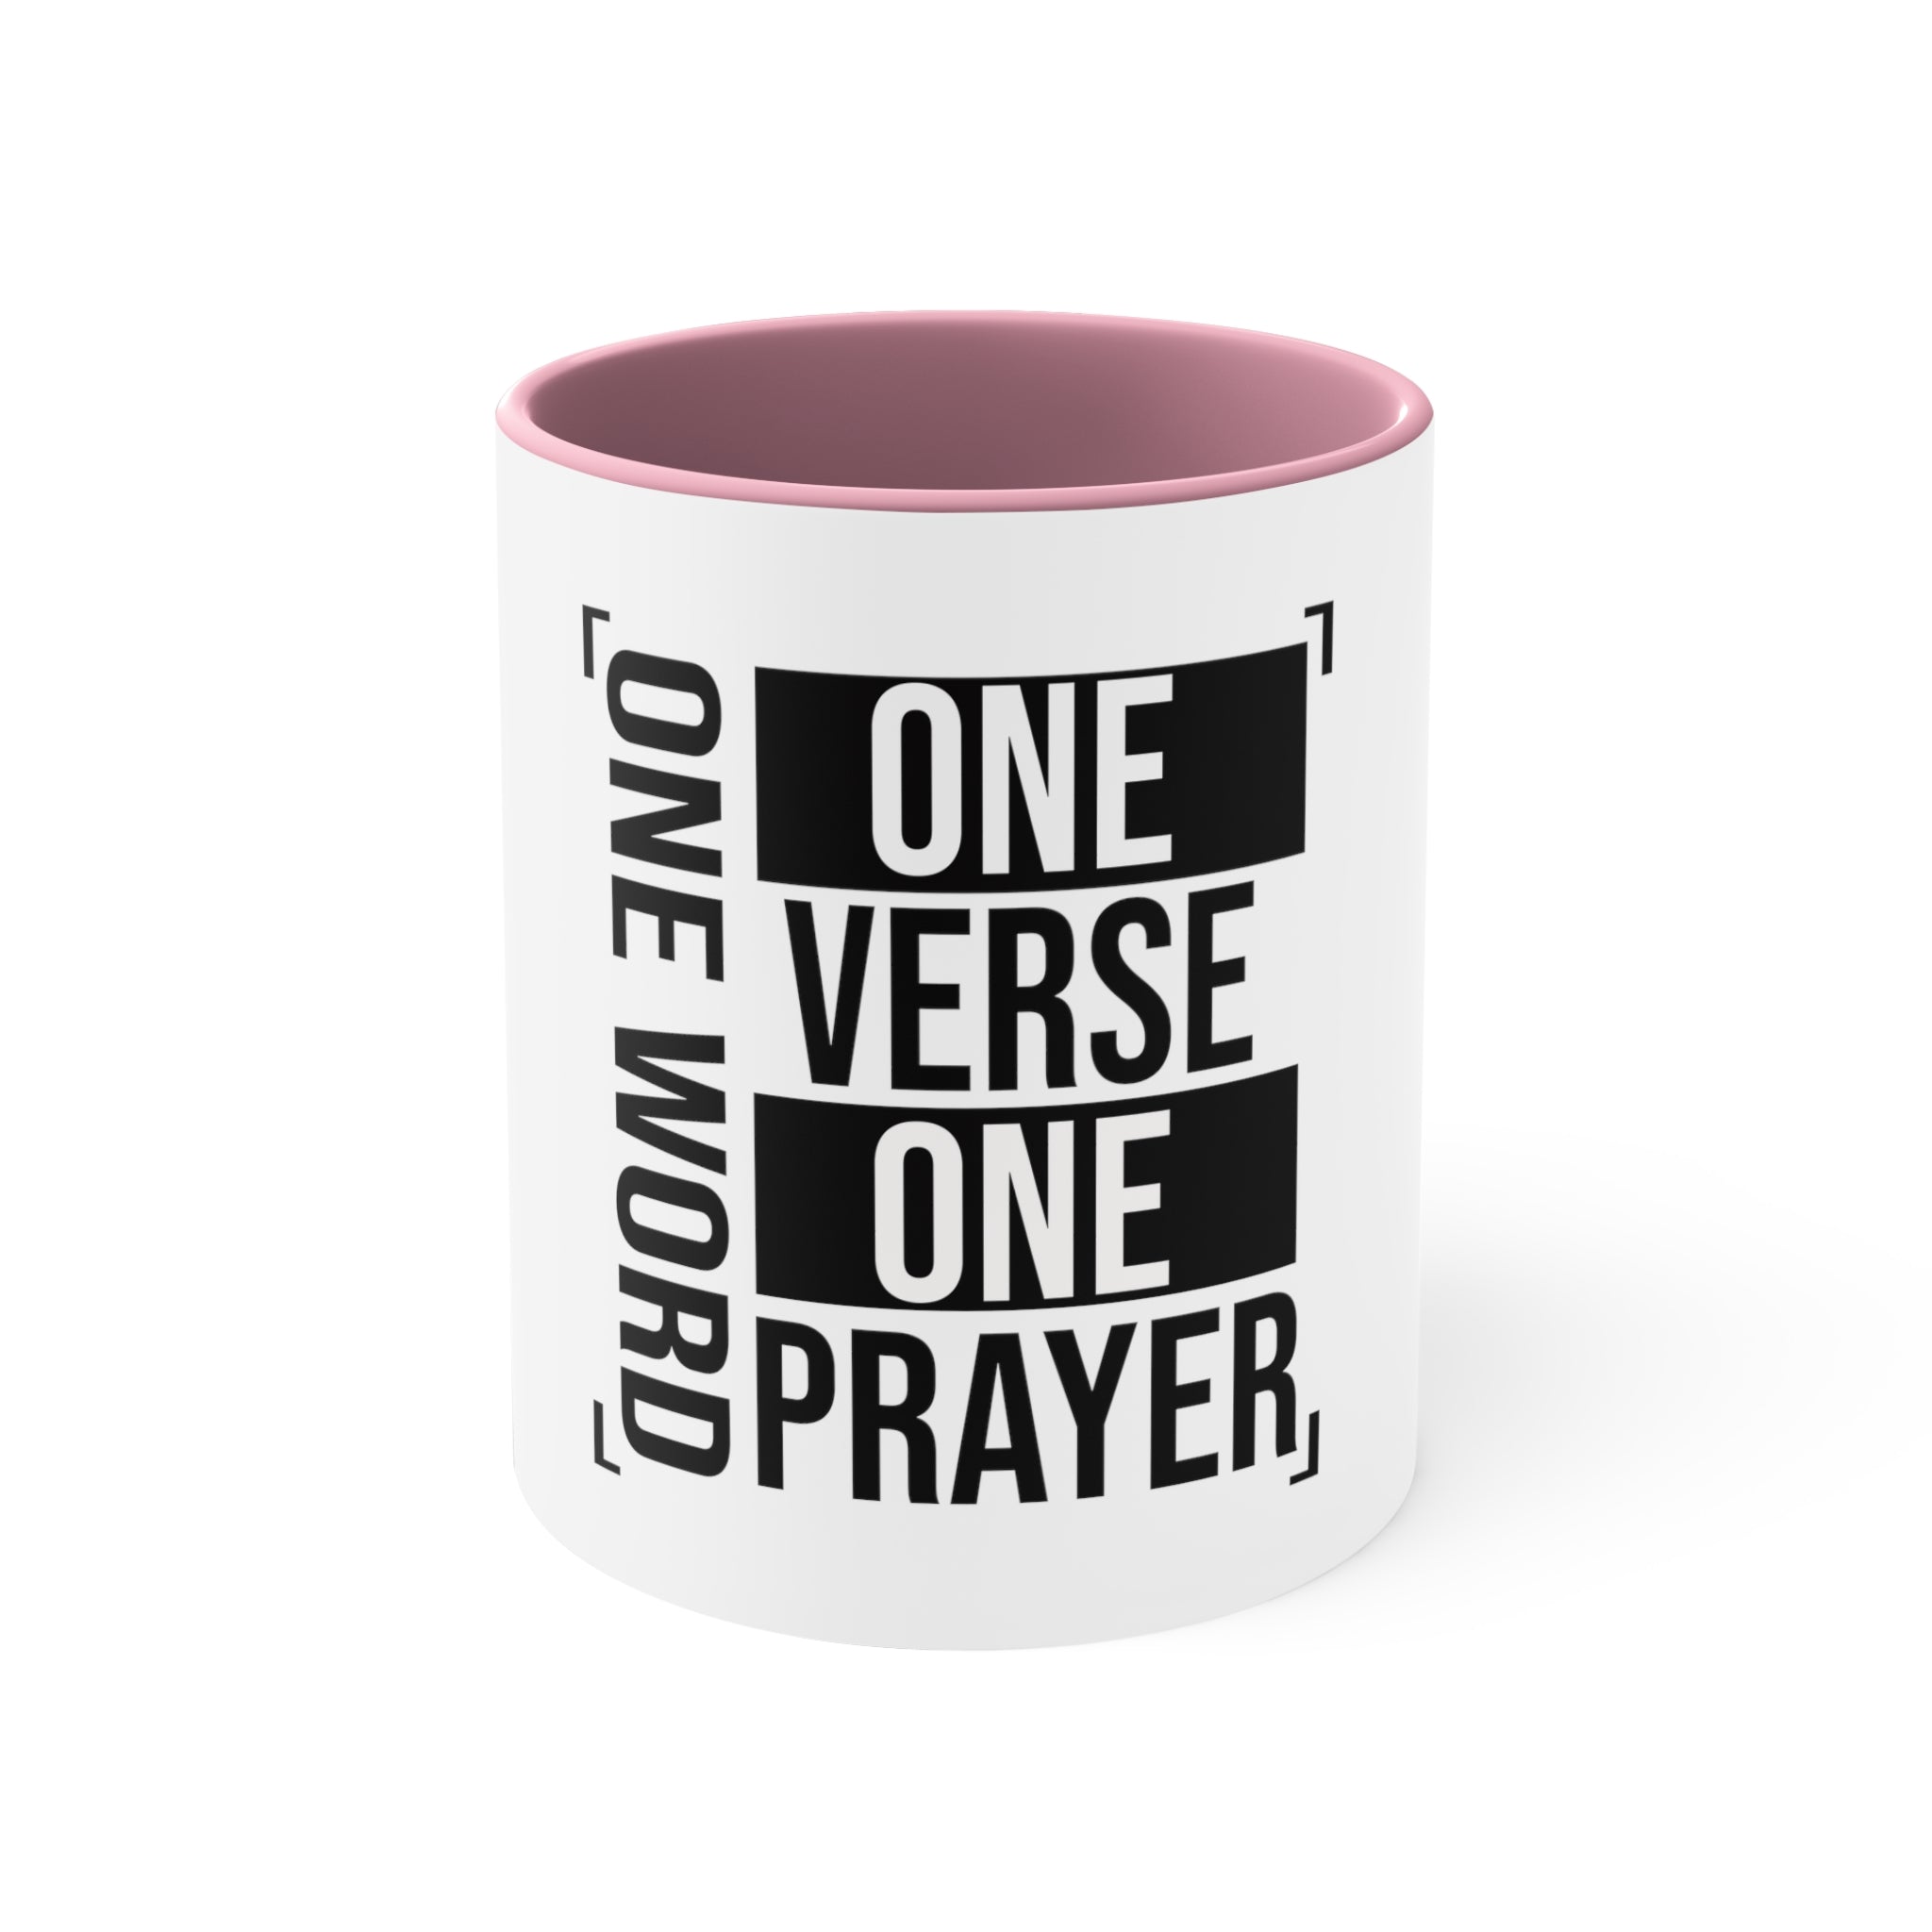 One Word One Verse One Prayer Accent Coffee Mug, 11oz